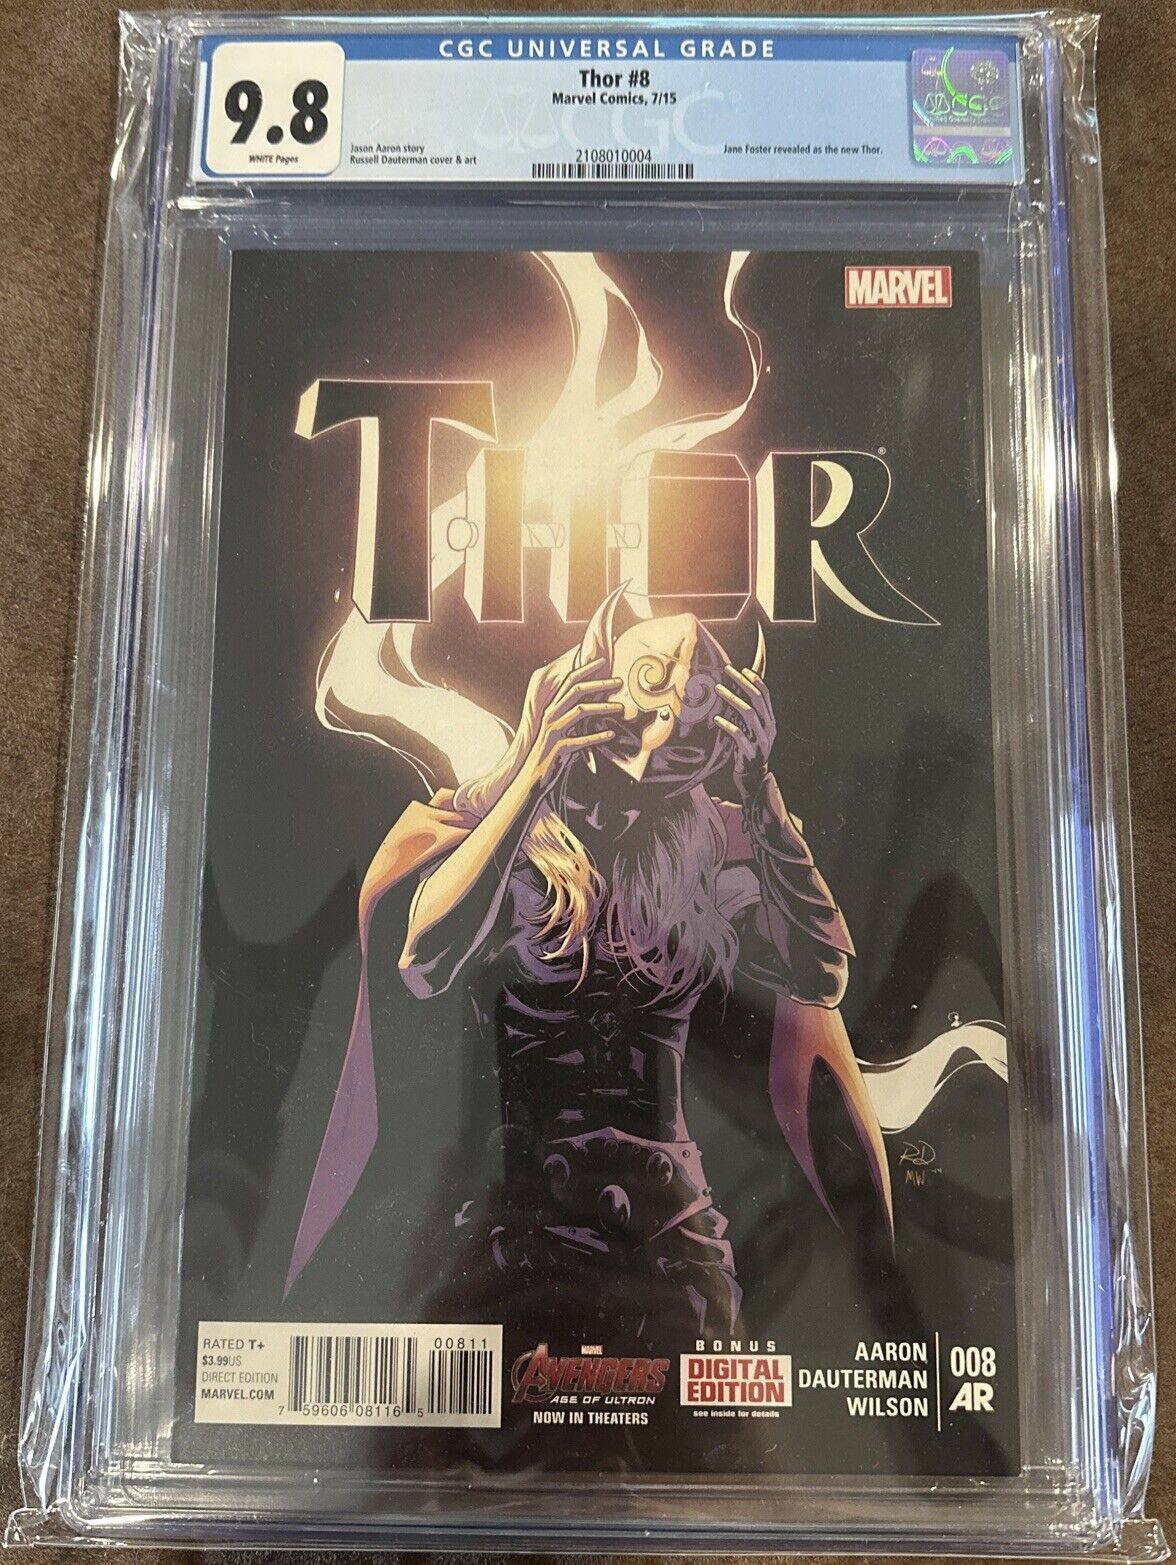 Thor #8- CGC 9.8- Jane Foster revealed as Thor(Marvel 2015) Dauterman Cover Art